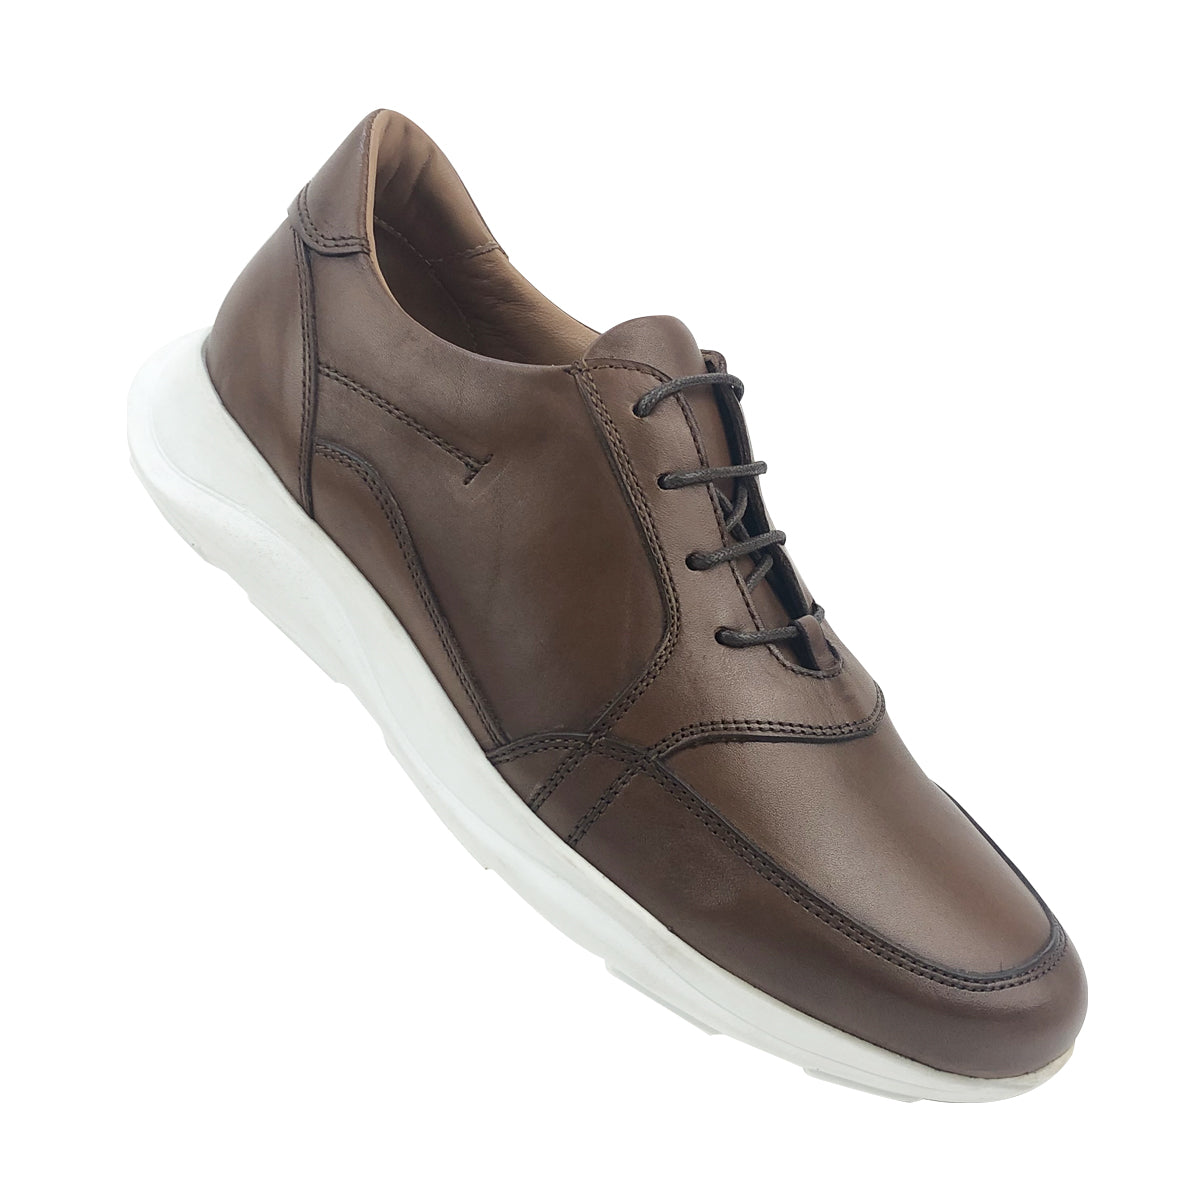 BSK04-015 - Chaussure cuir Taba - deluxe-maroc